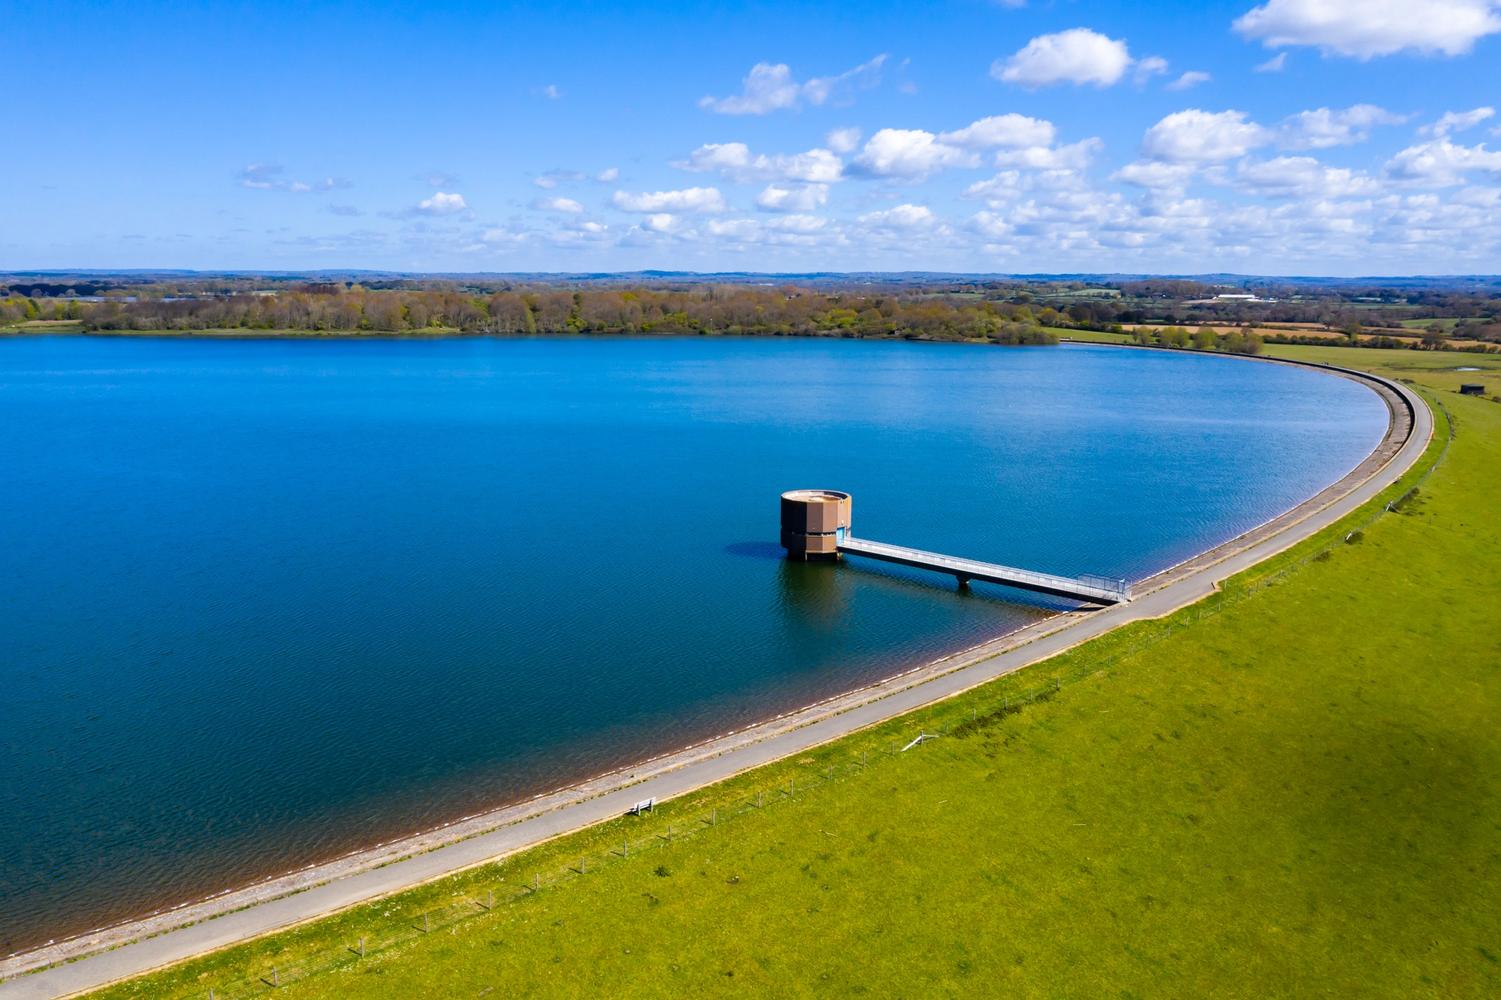 Bewl Water reservoir